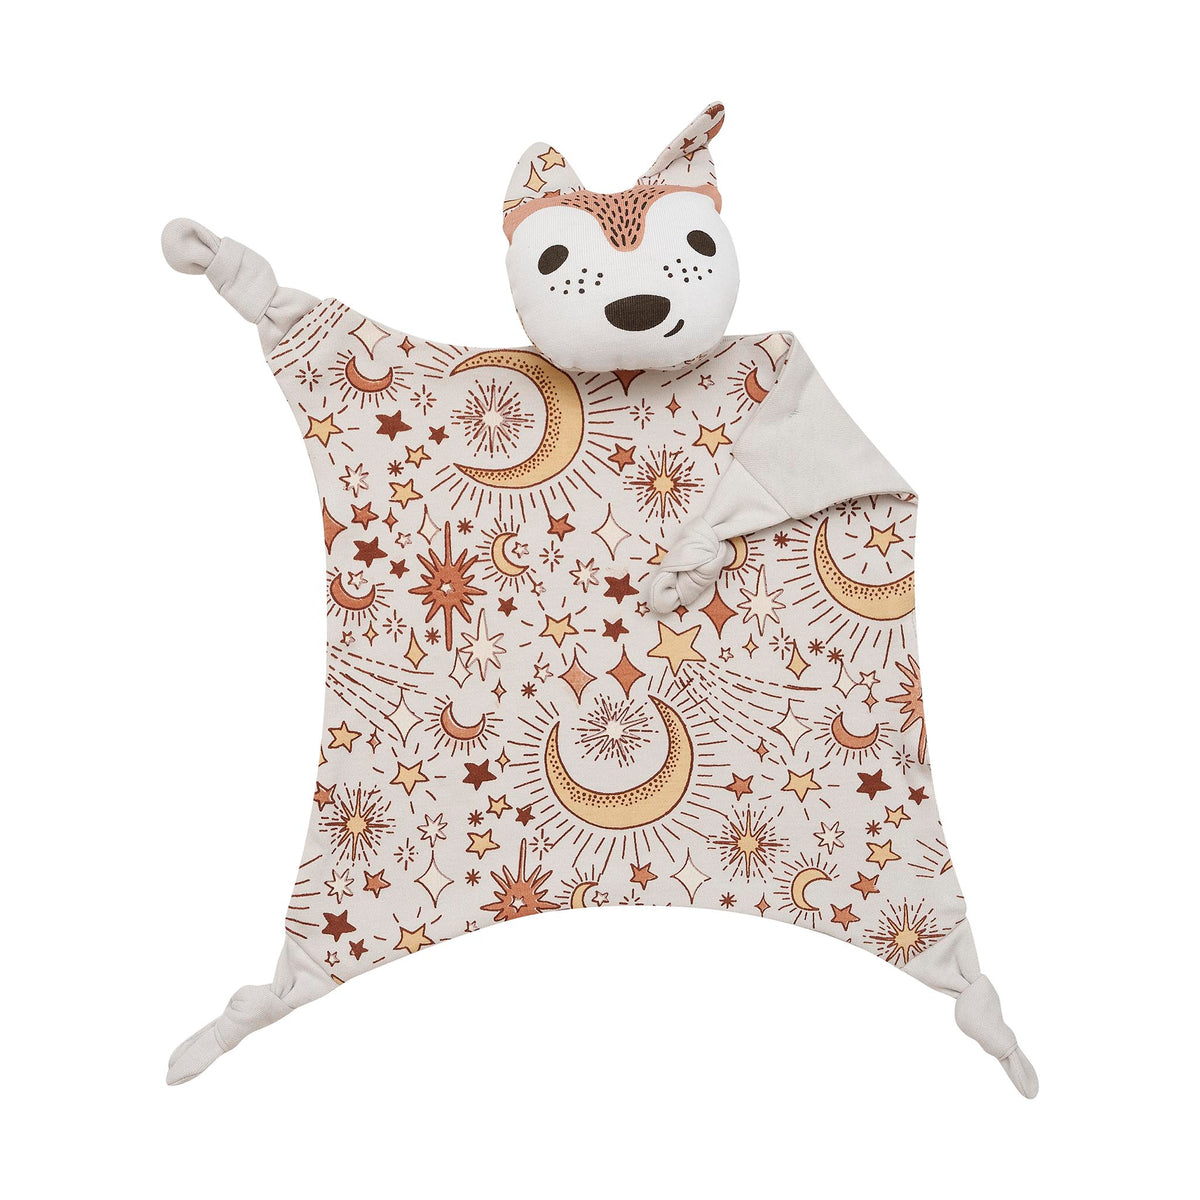 (NEW) Wolfie Kippin Organic Cotton Baby Comforter (7559698743545)